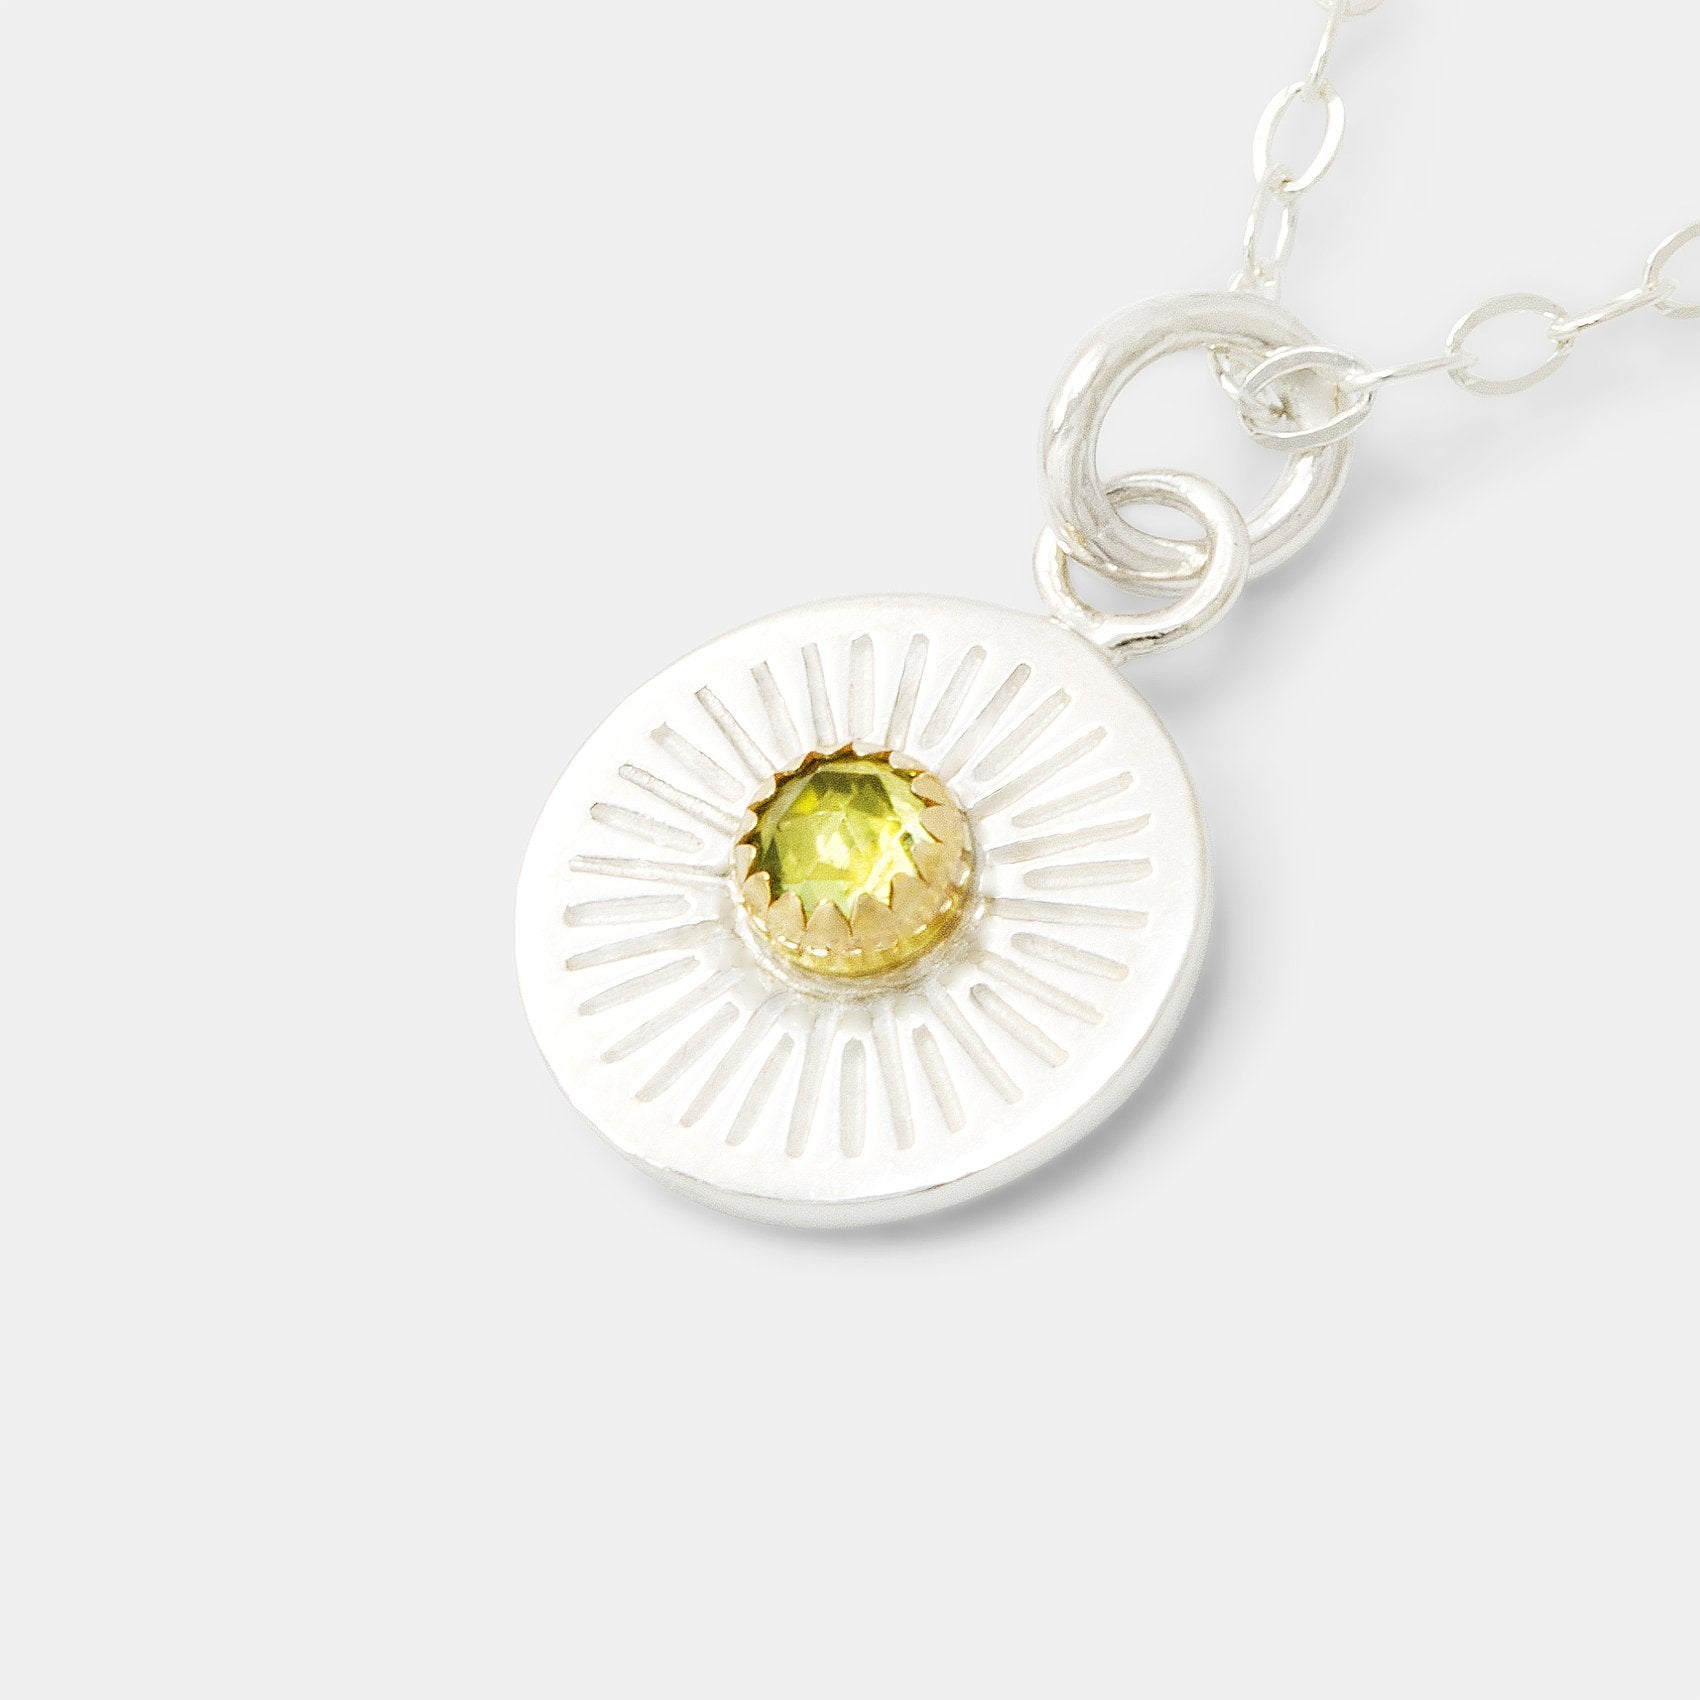 Birthstone pendant: peridot - Simone Walsh Jewellery Australia